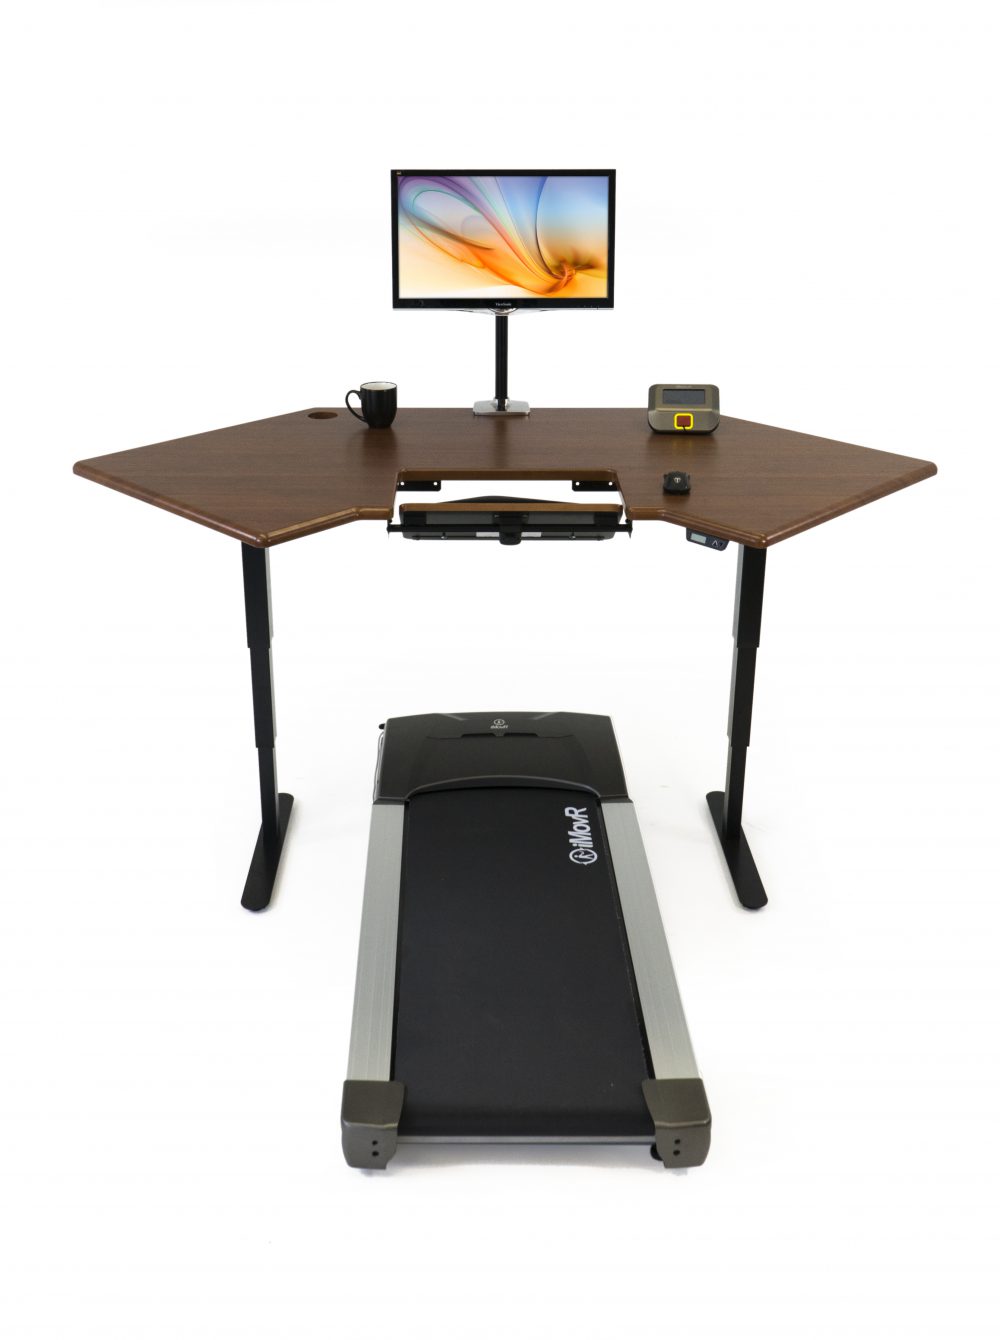 build your own diy treadmill desk |